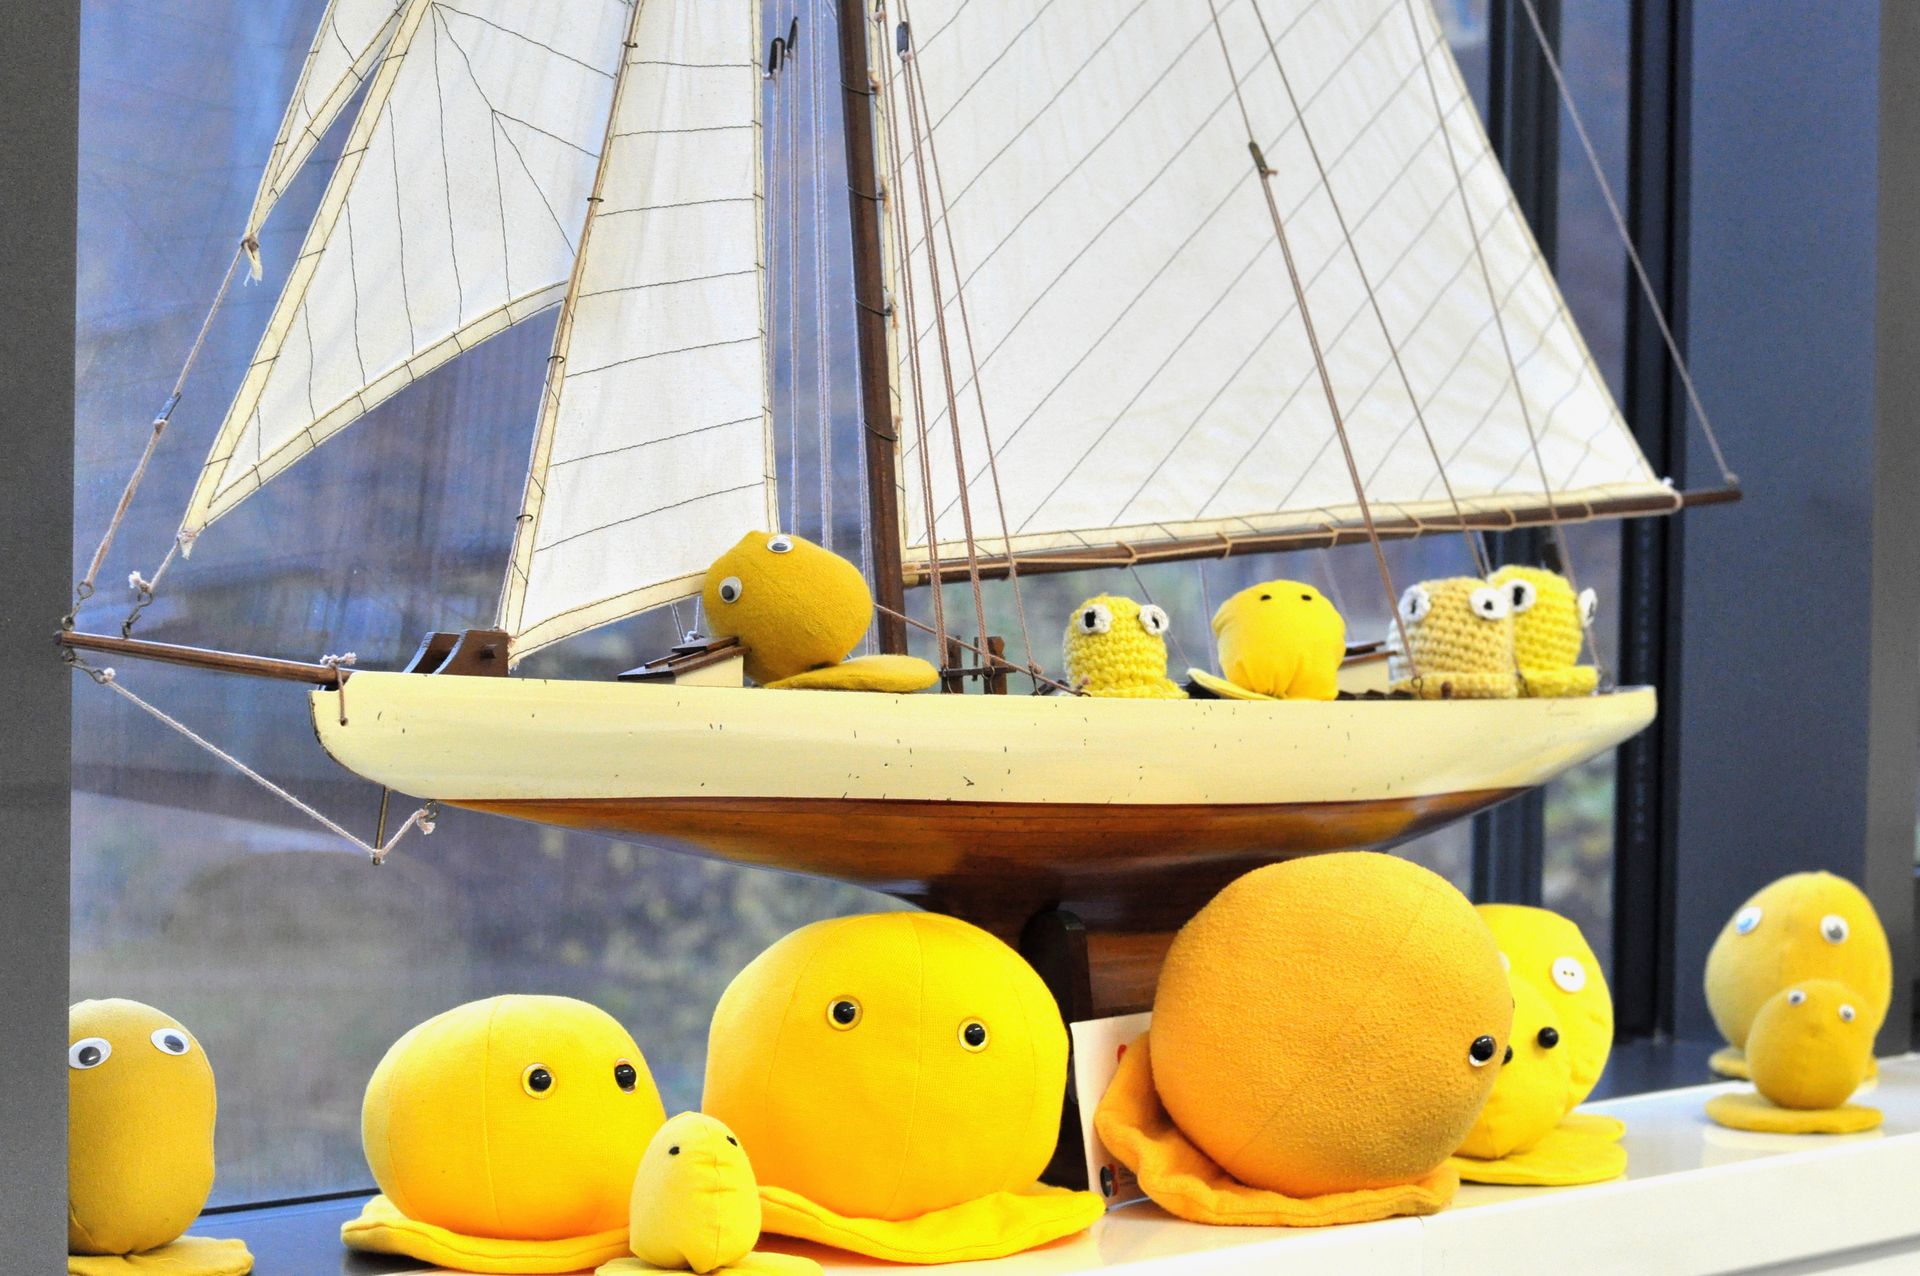 Yellow bacteria models on a model sailing ship